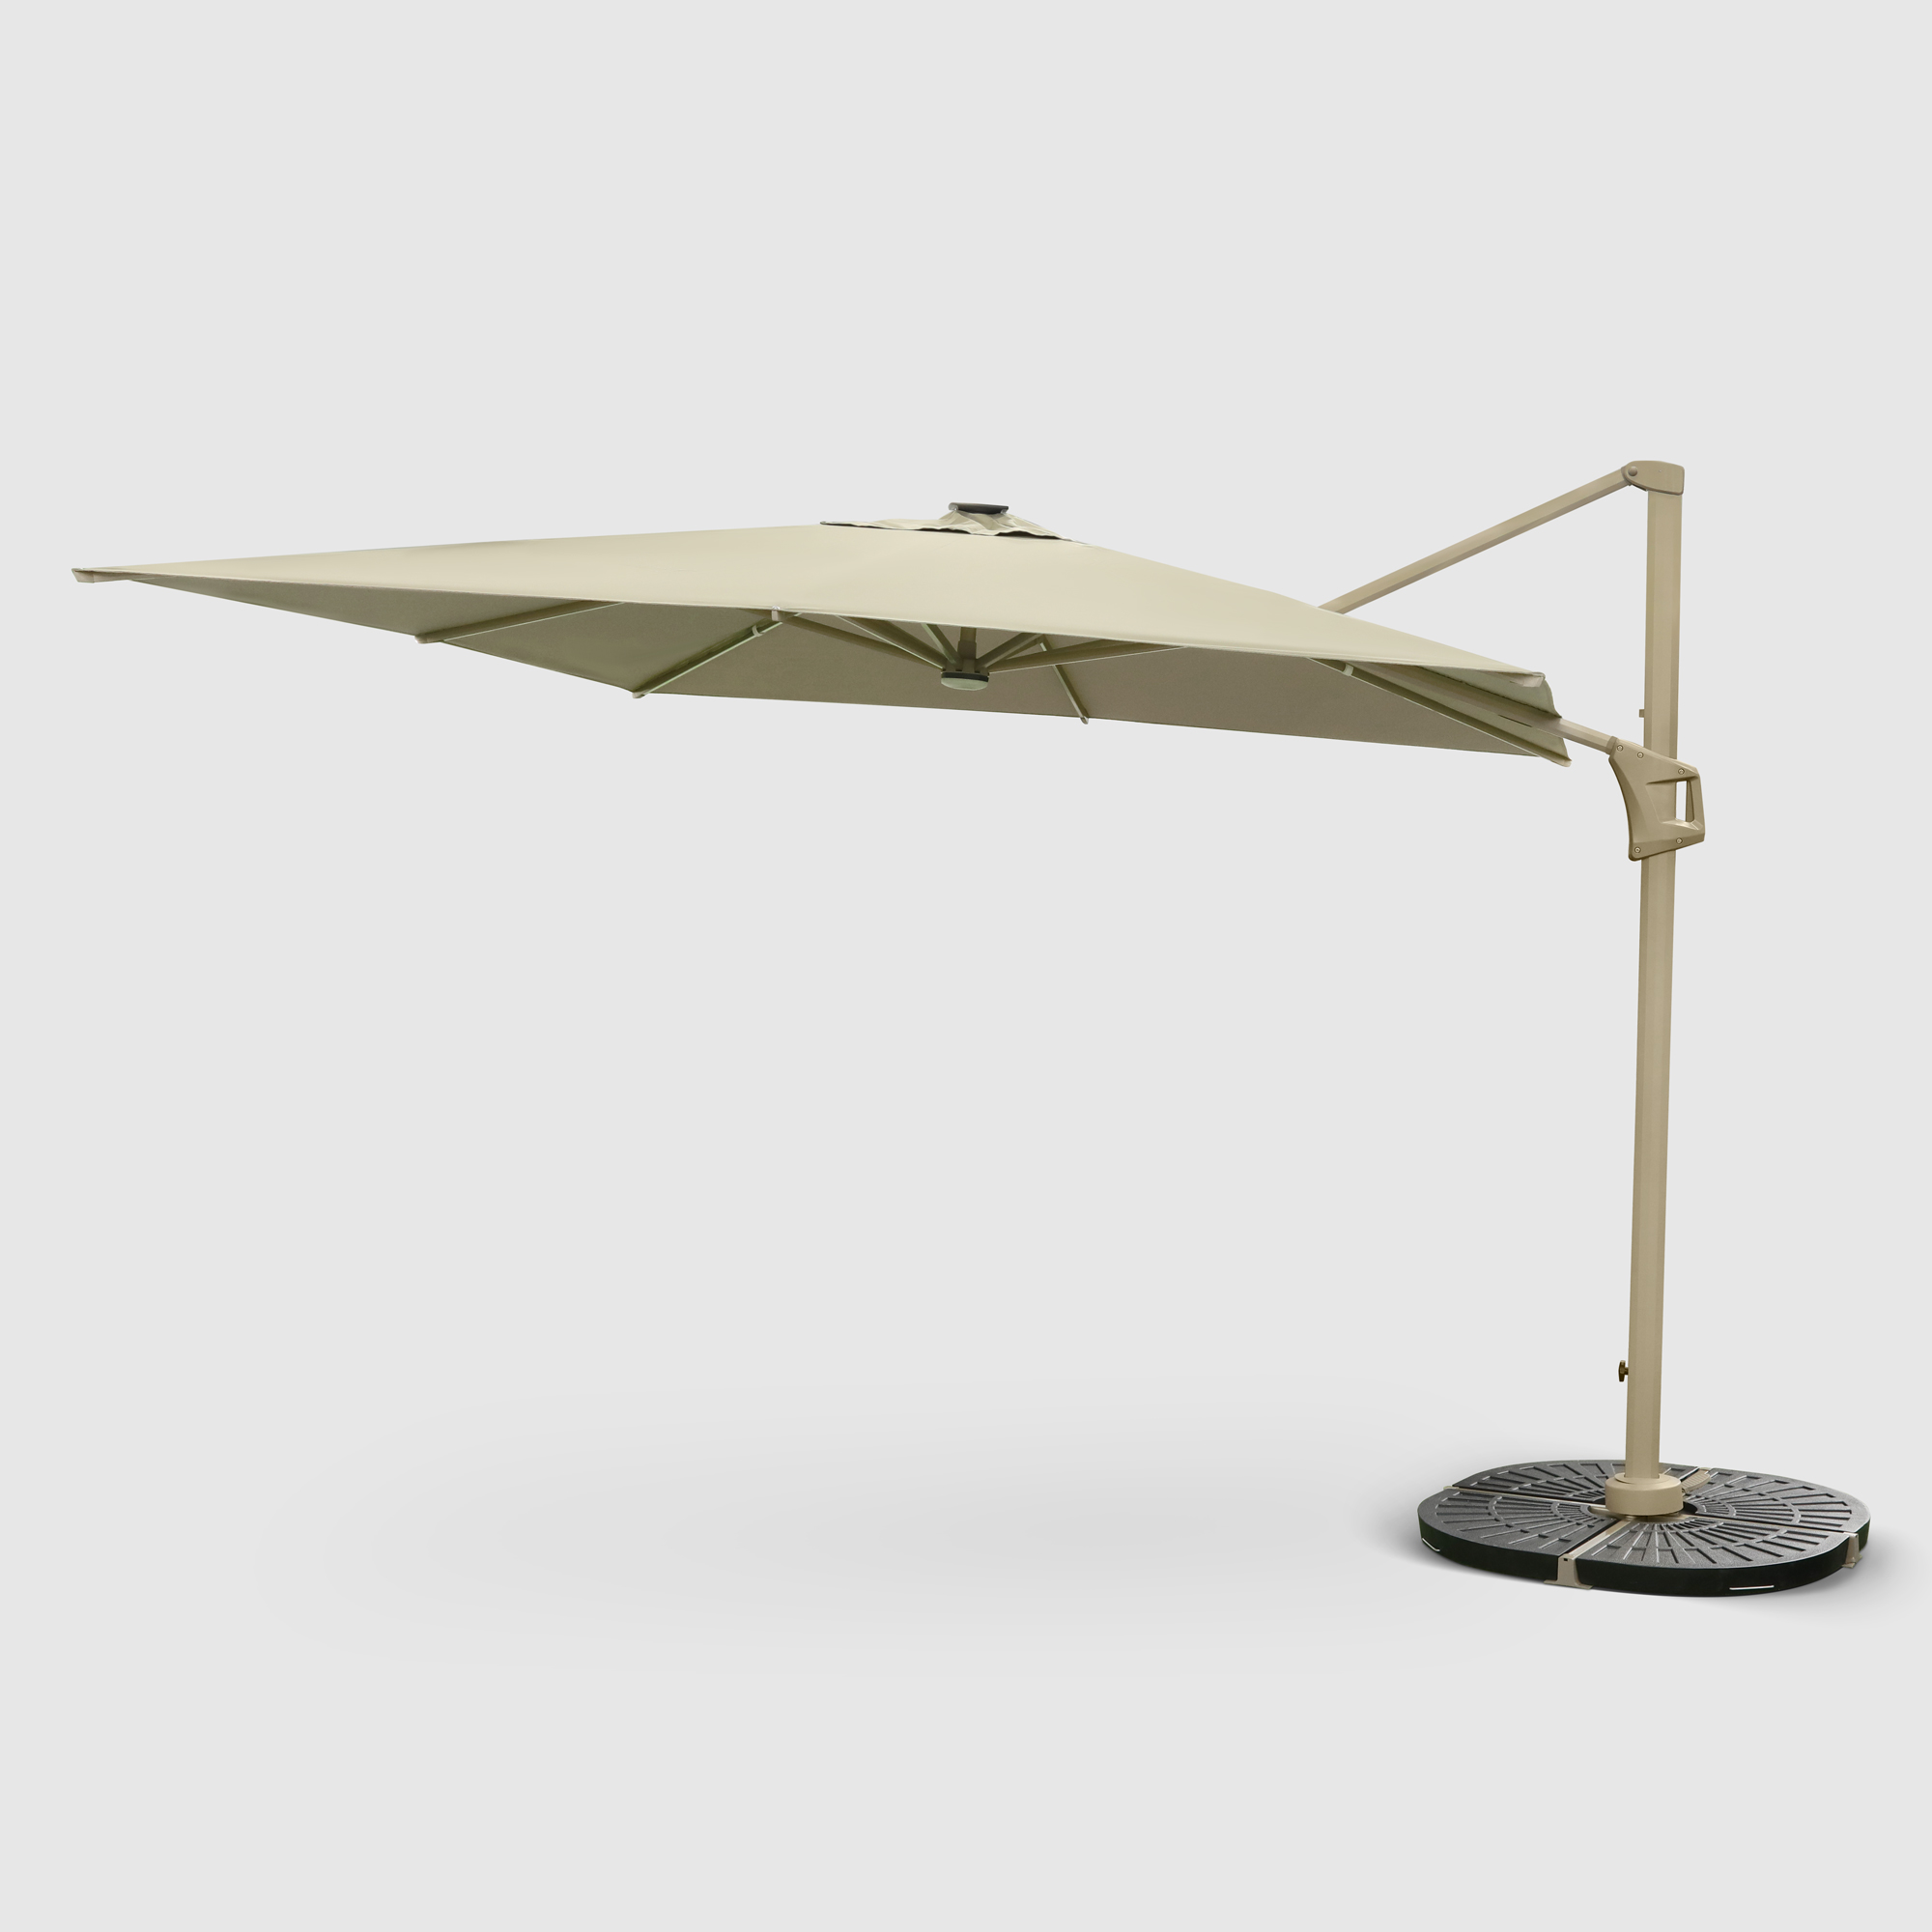 Зонт с LED подсветкой Greenpatio набор с кронштейном и утяжелителем 300х300 см зонт greenpatio д3m с базой кронштейном и утяжелителем 300х300 см